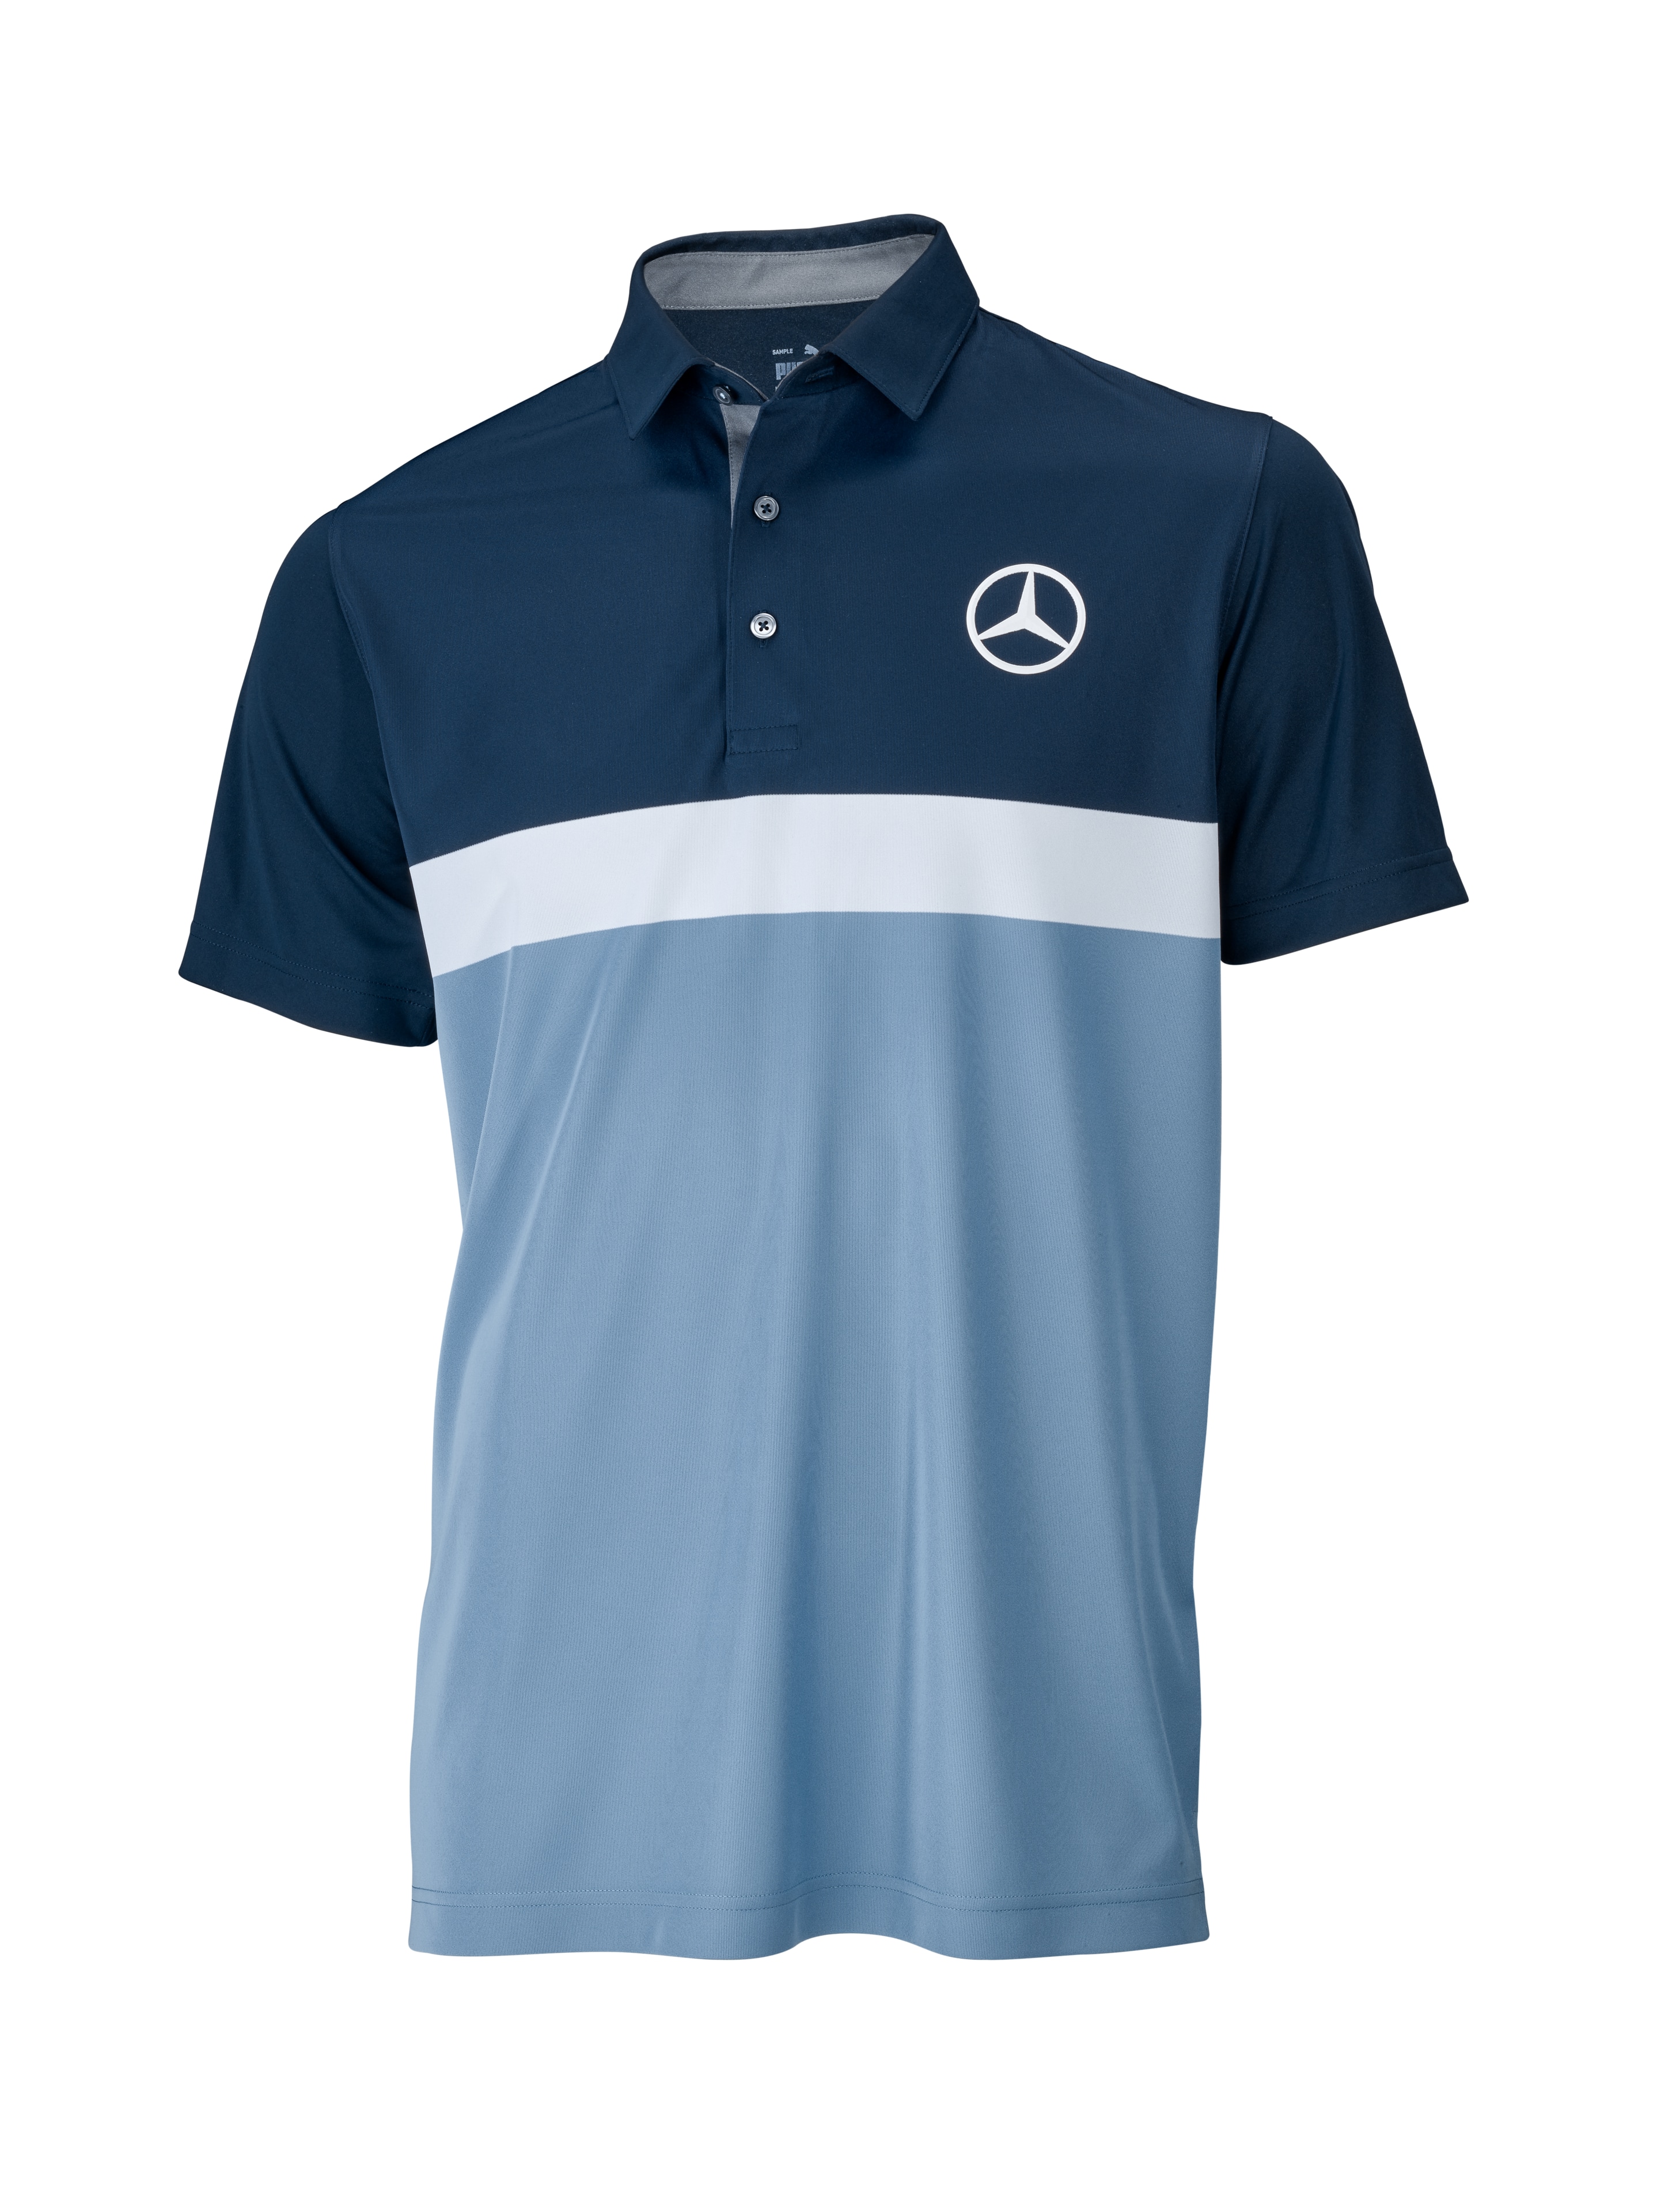 Golf-Poloshirt Herren, Pure Colorblock - navy / Zen Blue / white, XXL